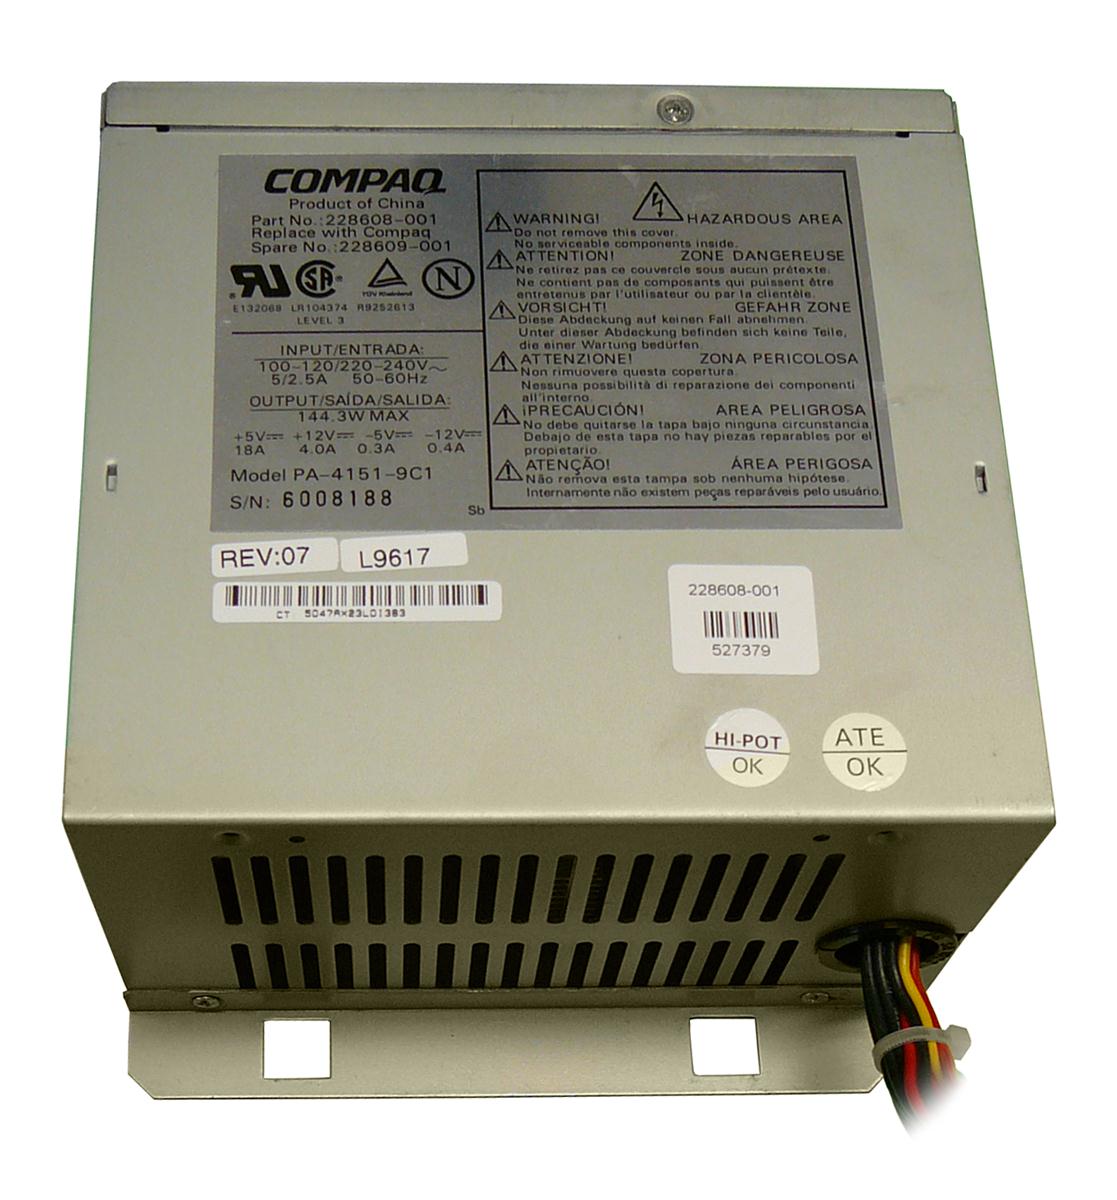 Compaq 145Watt Power Supply for Natelligent 8500 Series Router Mfr P/N 228608-001